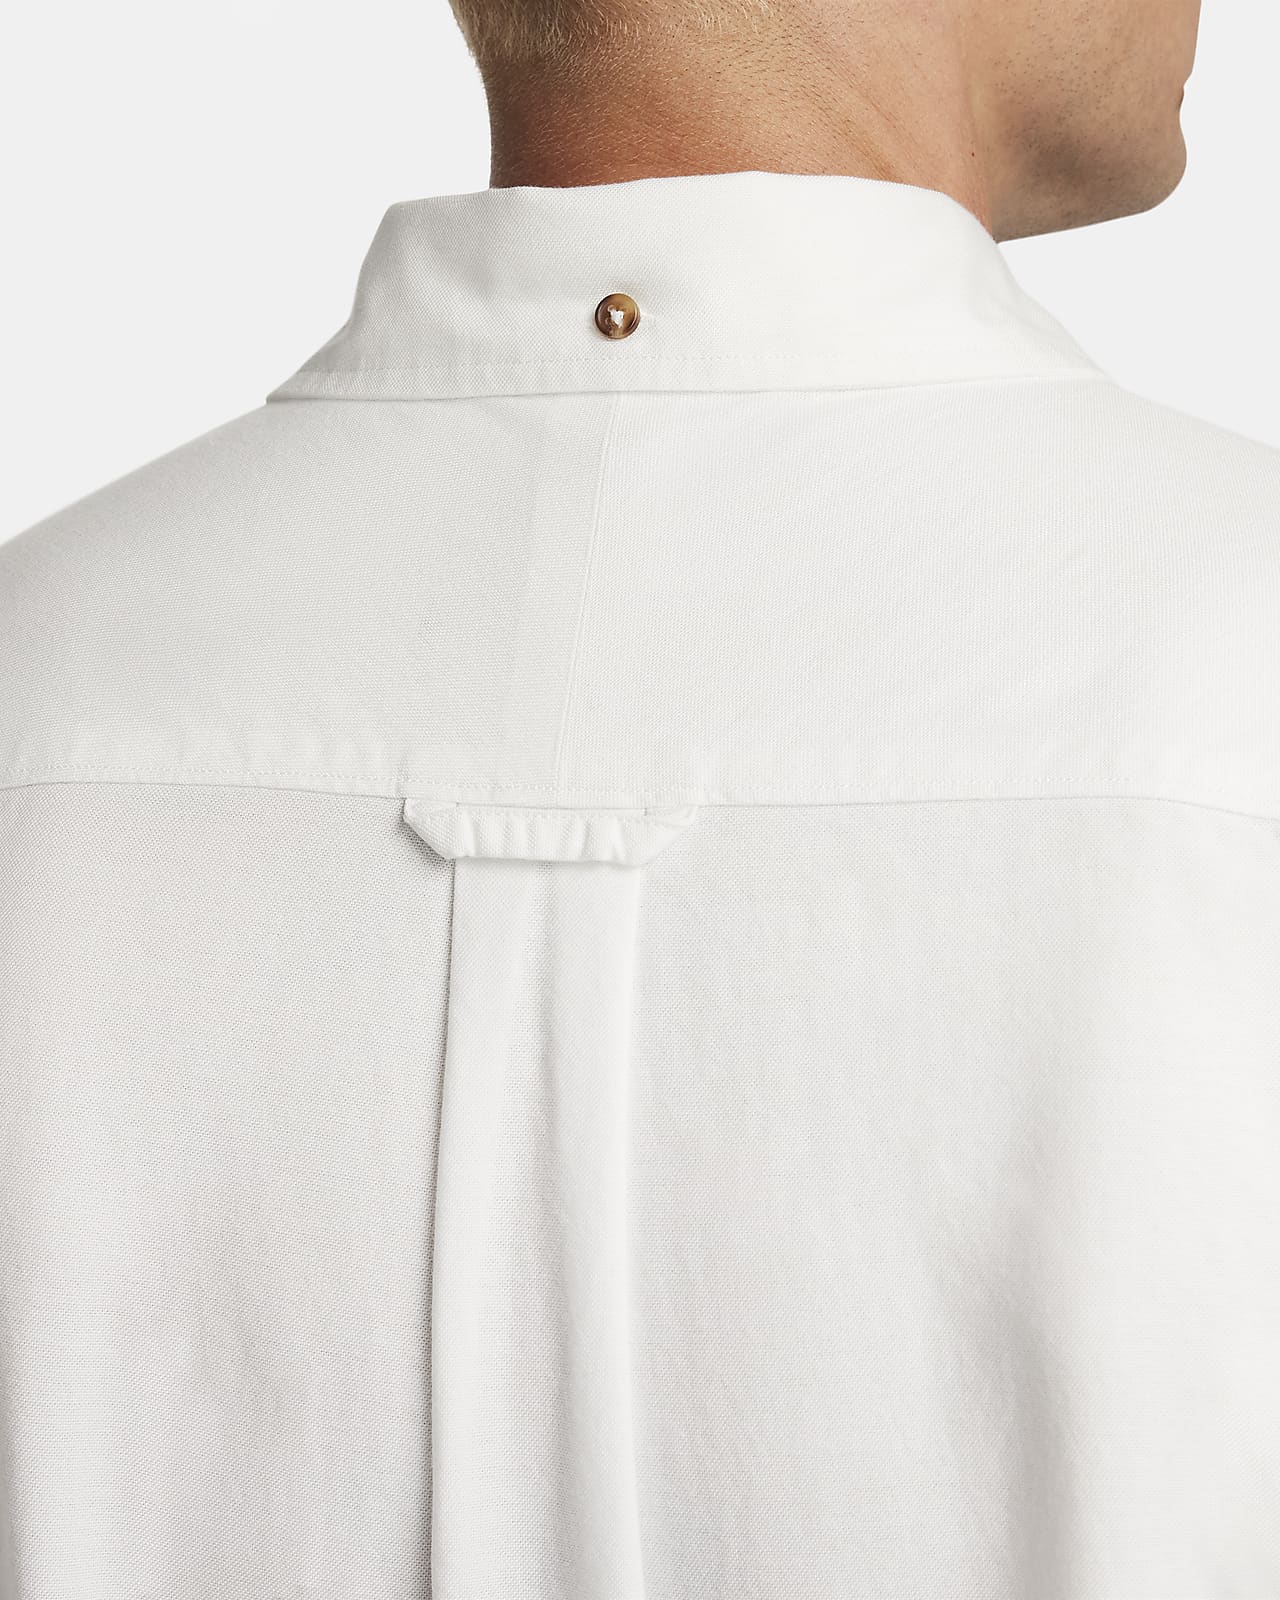 Nike Life Men's Long-Sleeve Oxford Button-Down Shirt